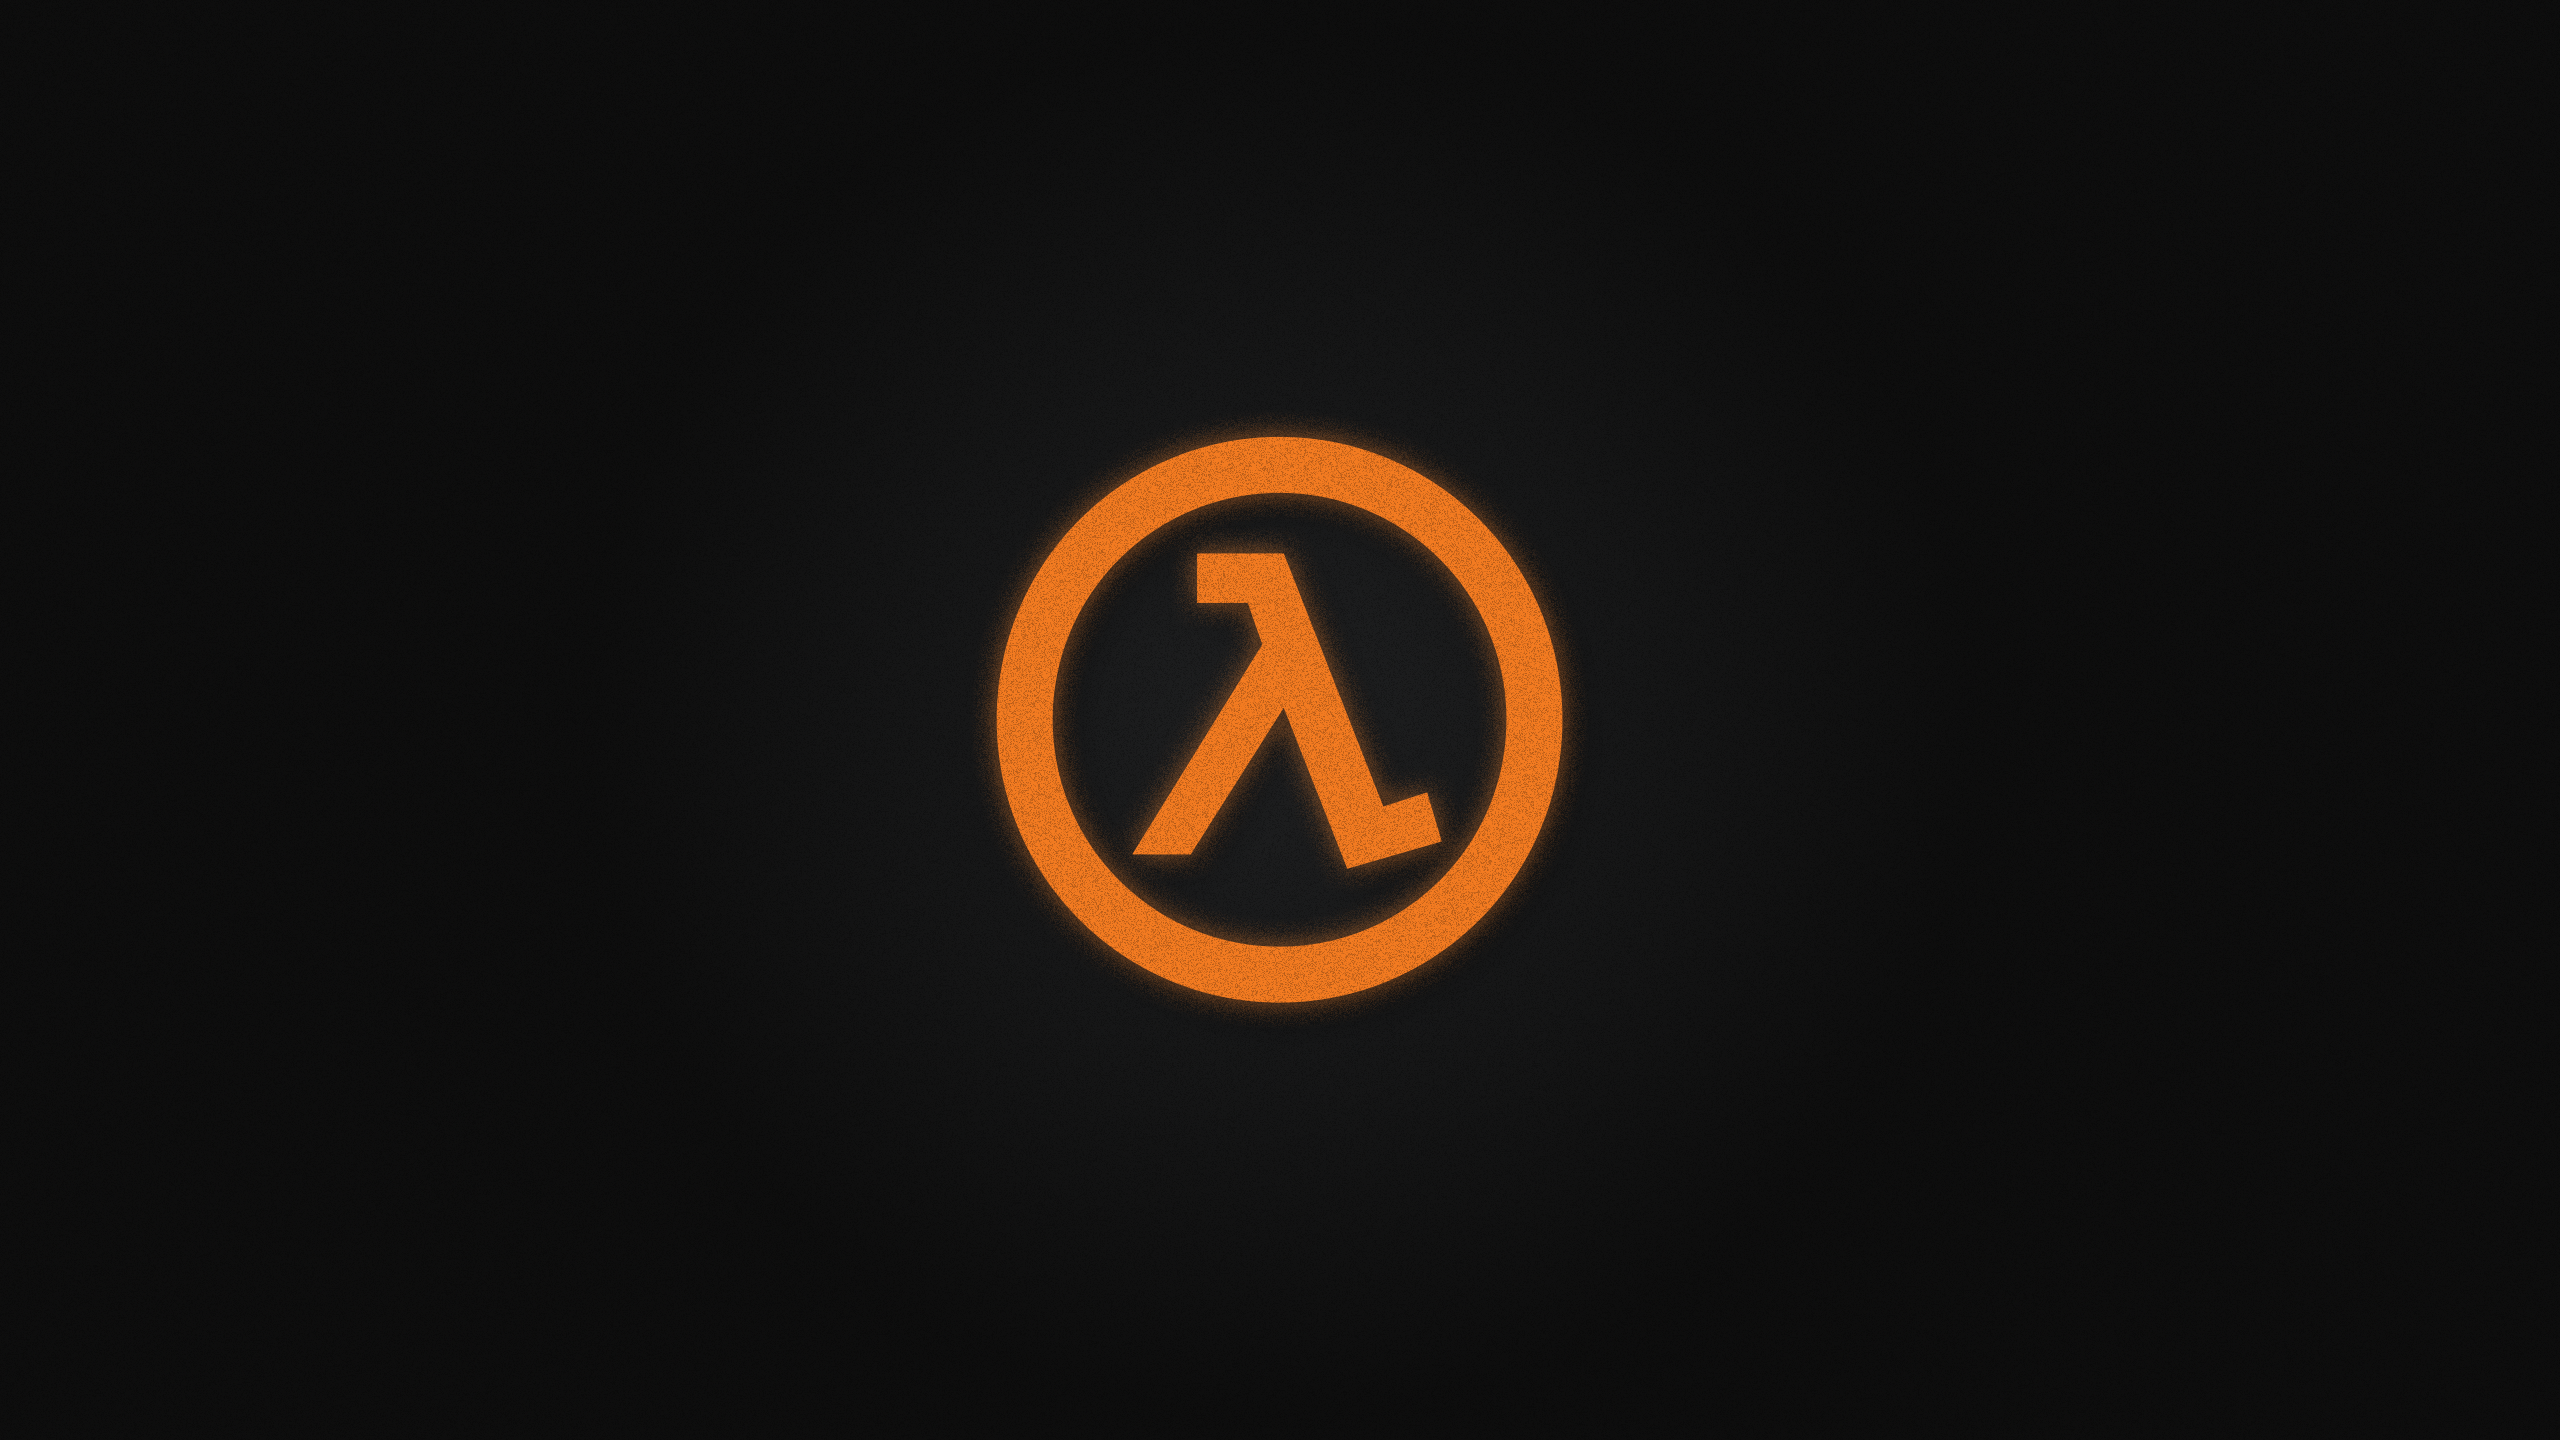 General 2560x1440 Half-Life lambda logo PC gaming simple background